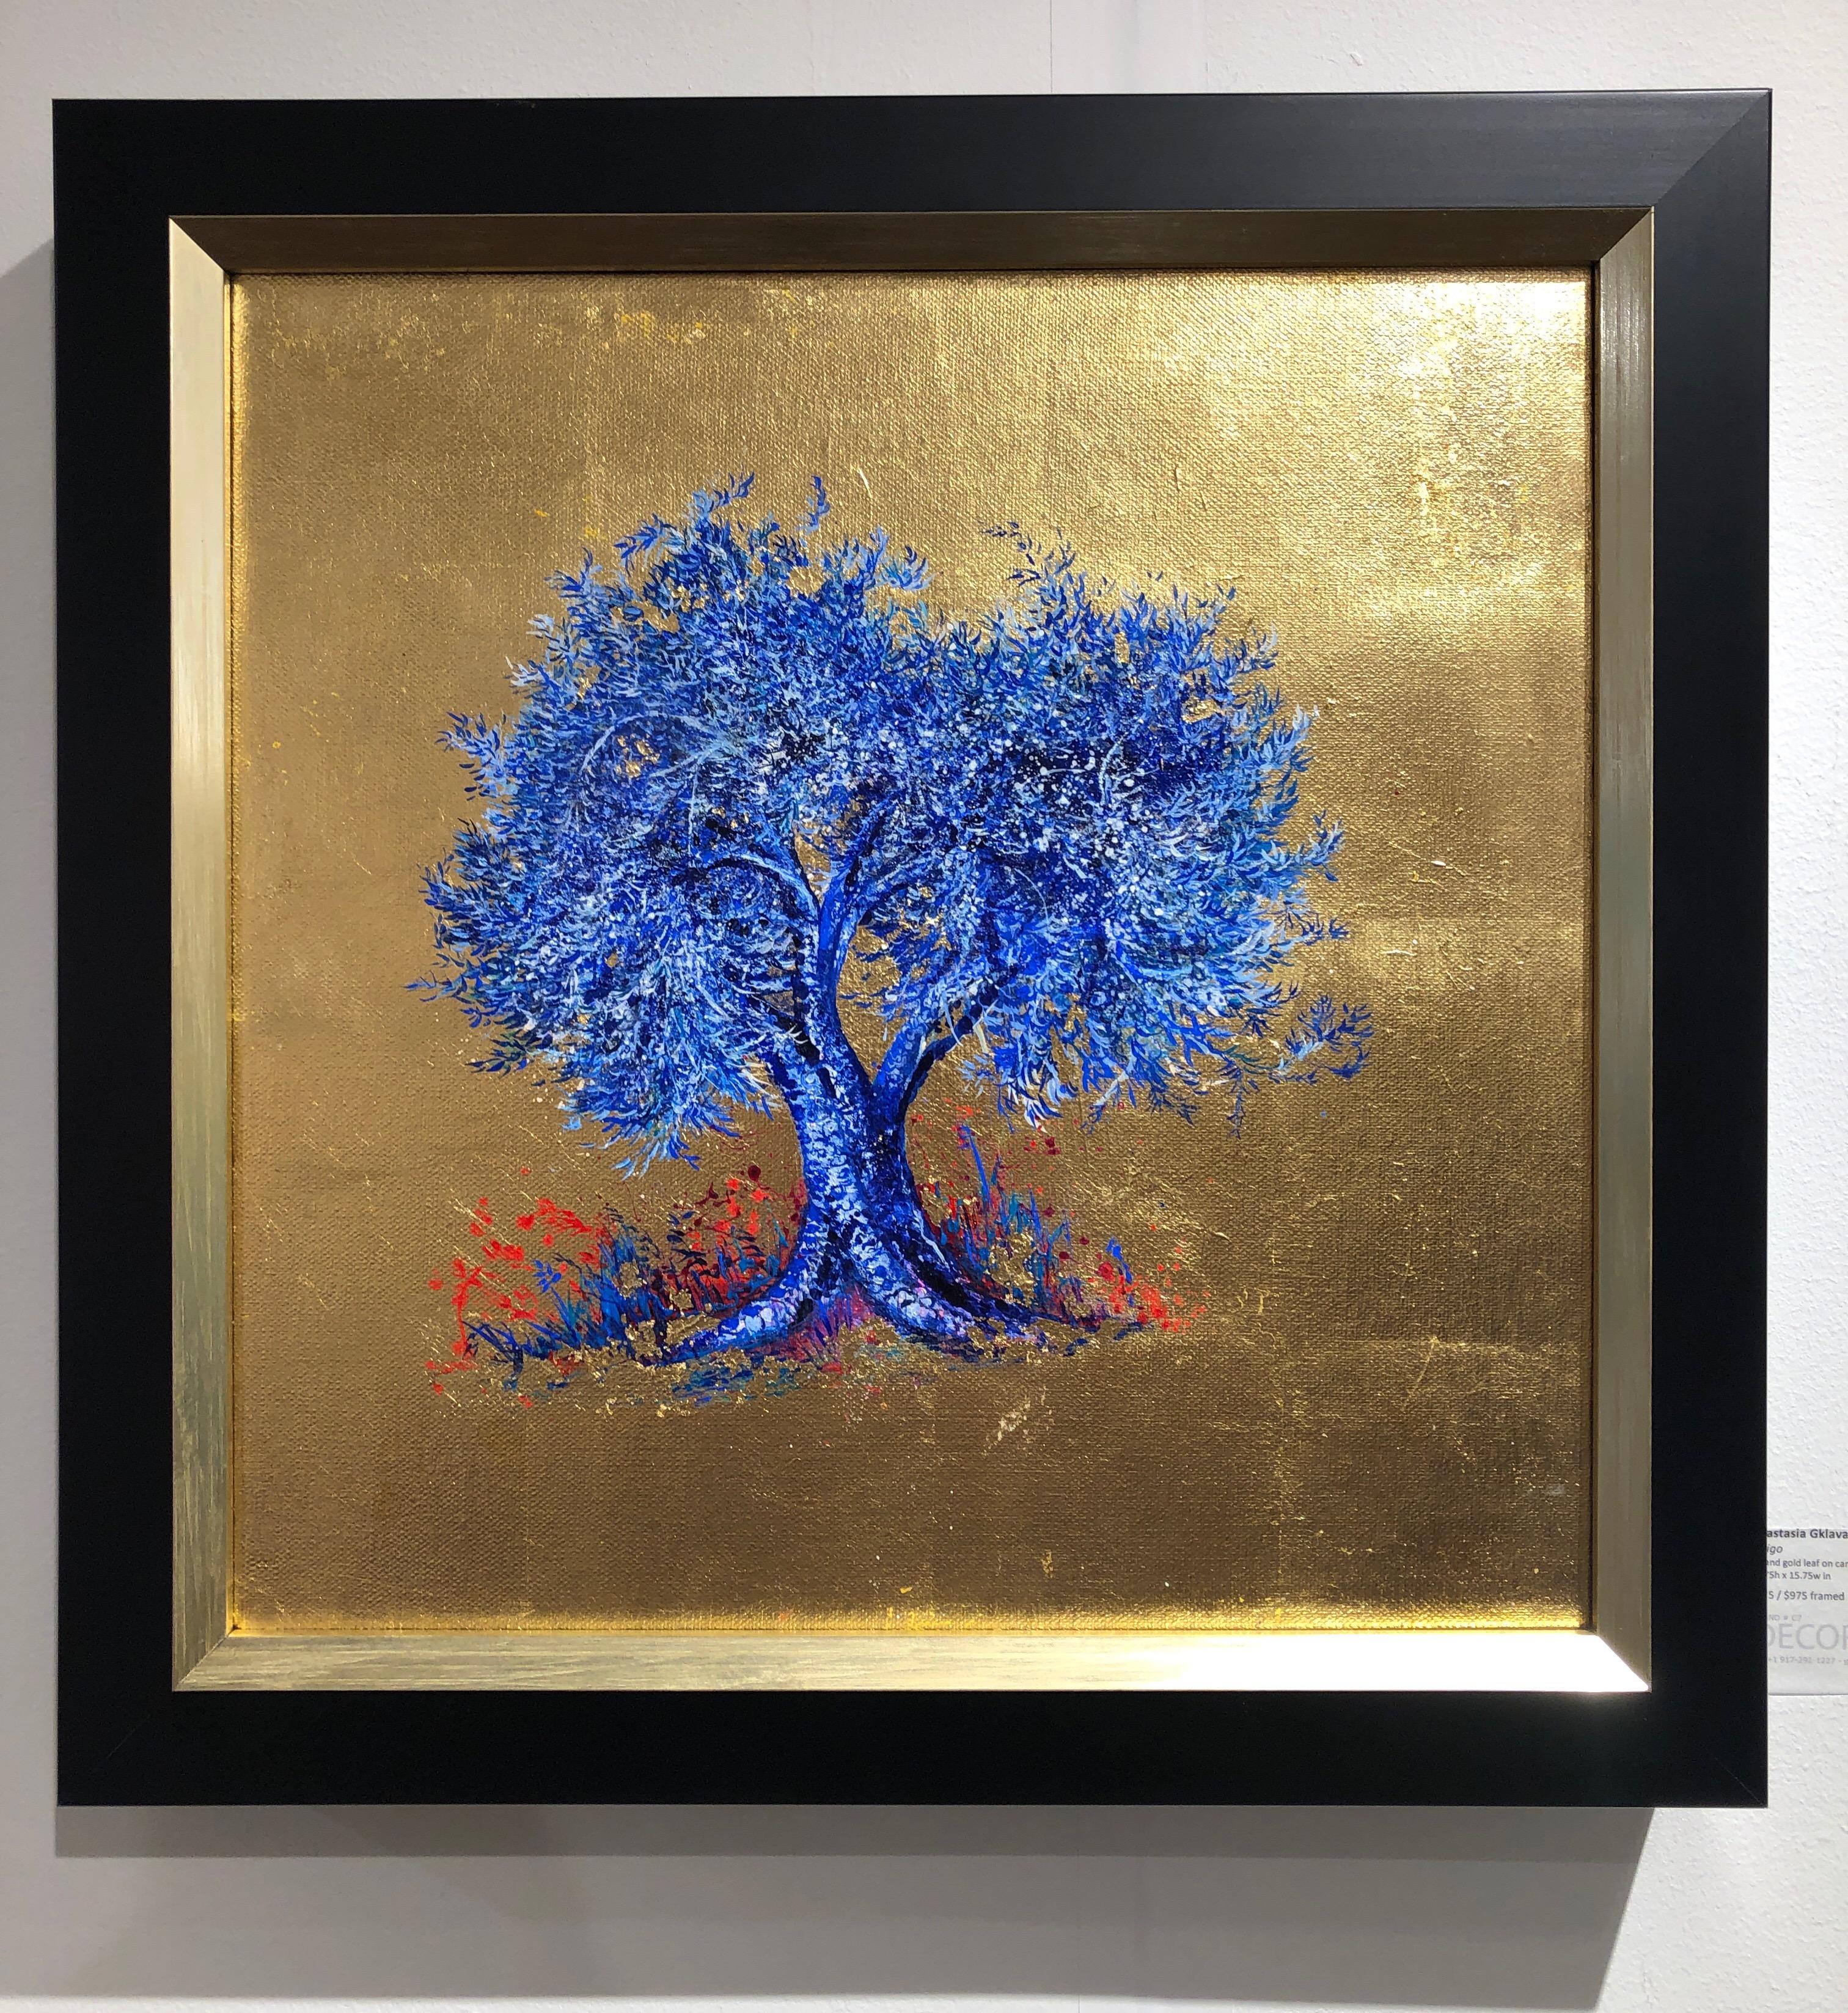 Anastasia Gklava Landscape Painting - Indigo, Blossom Blue Tree, Contemporary Oil on Canvas Gold Leaf Painting 